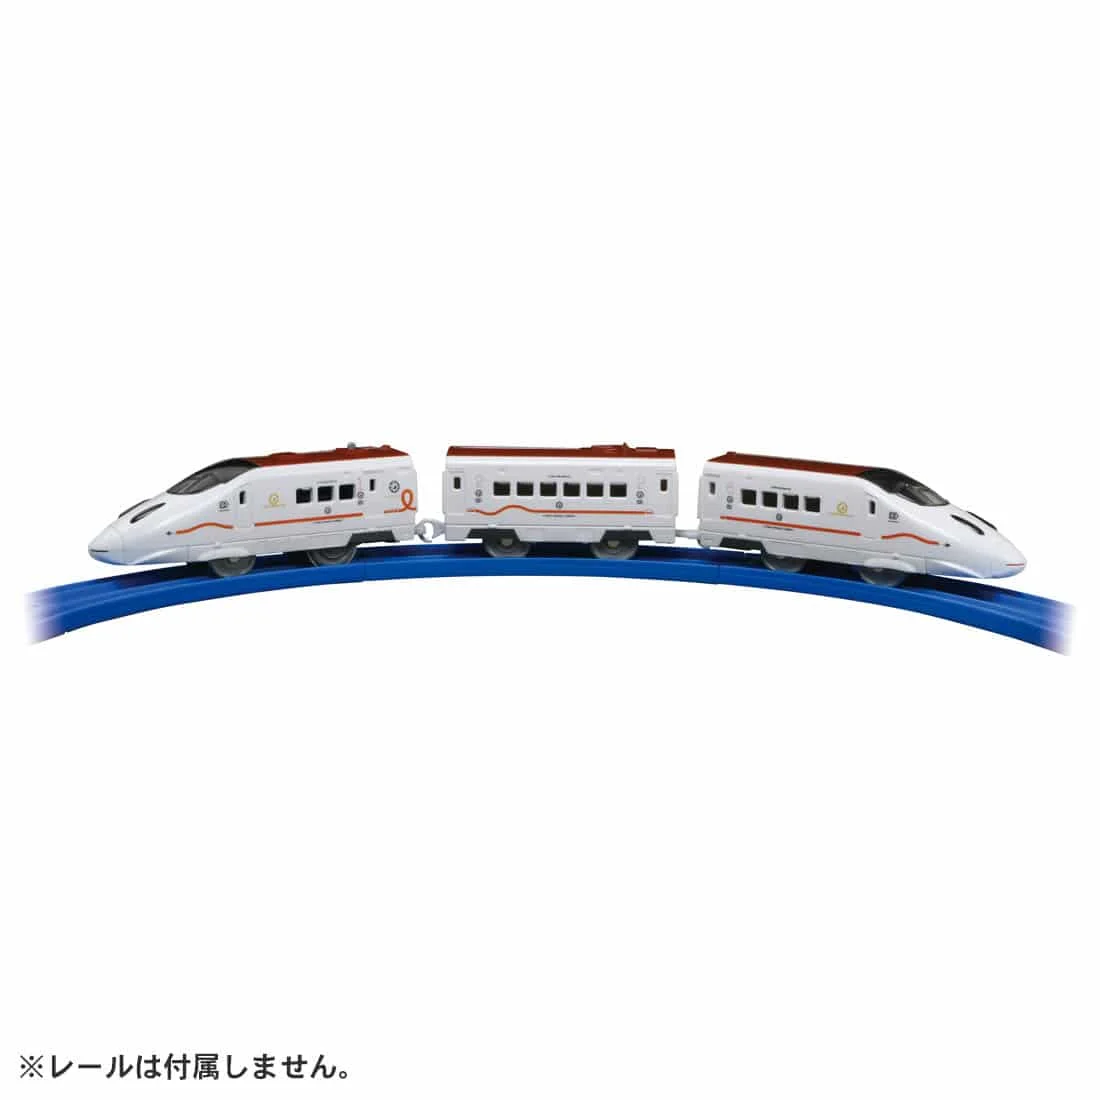 TAKARA TOMY Plarail New 800 series Shinkansen 6-car train set 